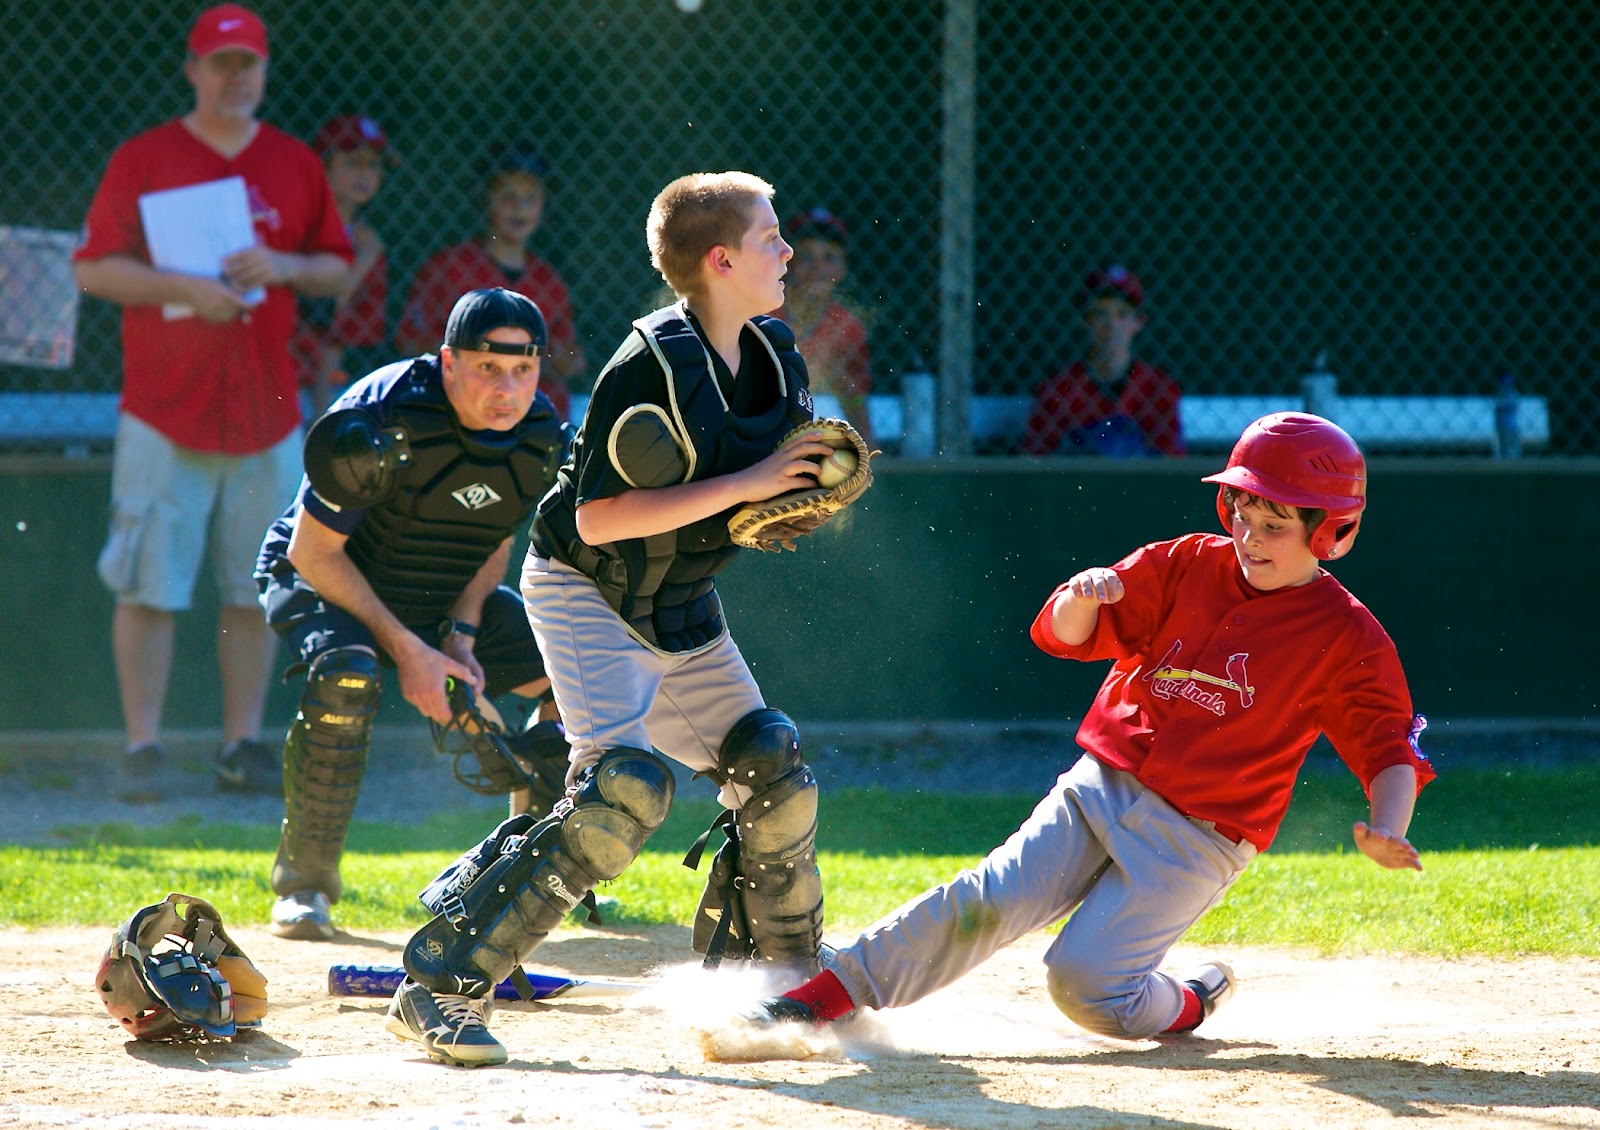 Little League Baseball Rules About Uniforms - SportsRec